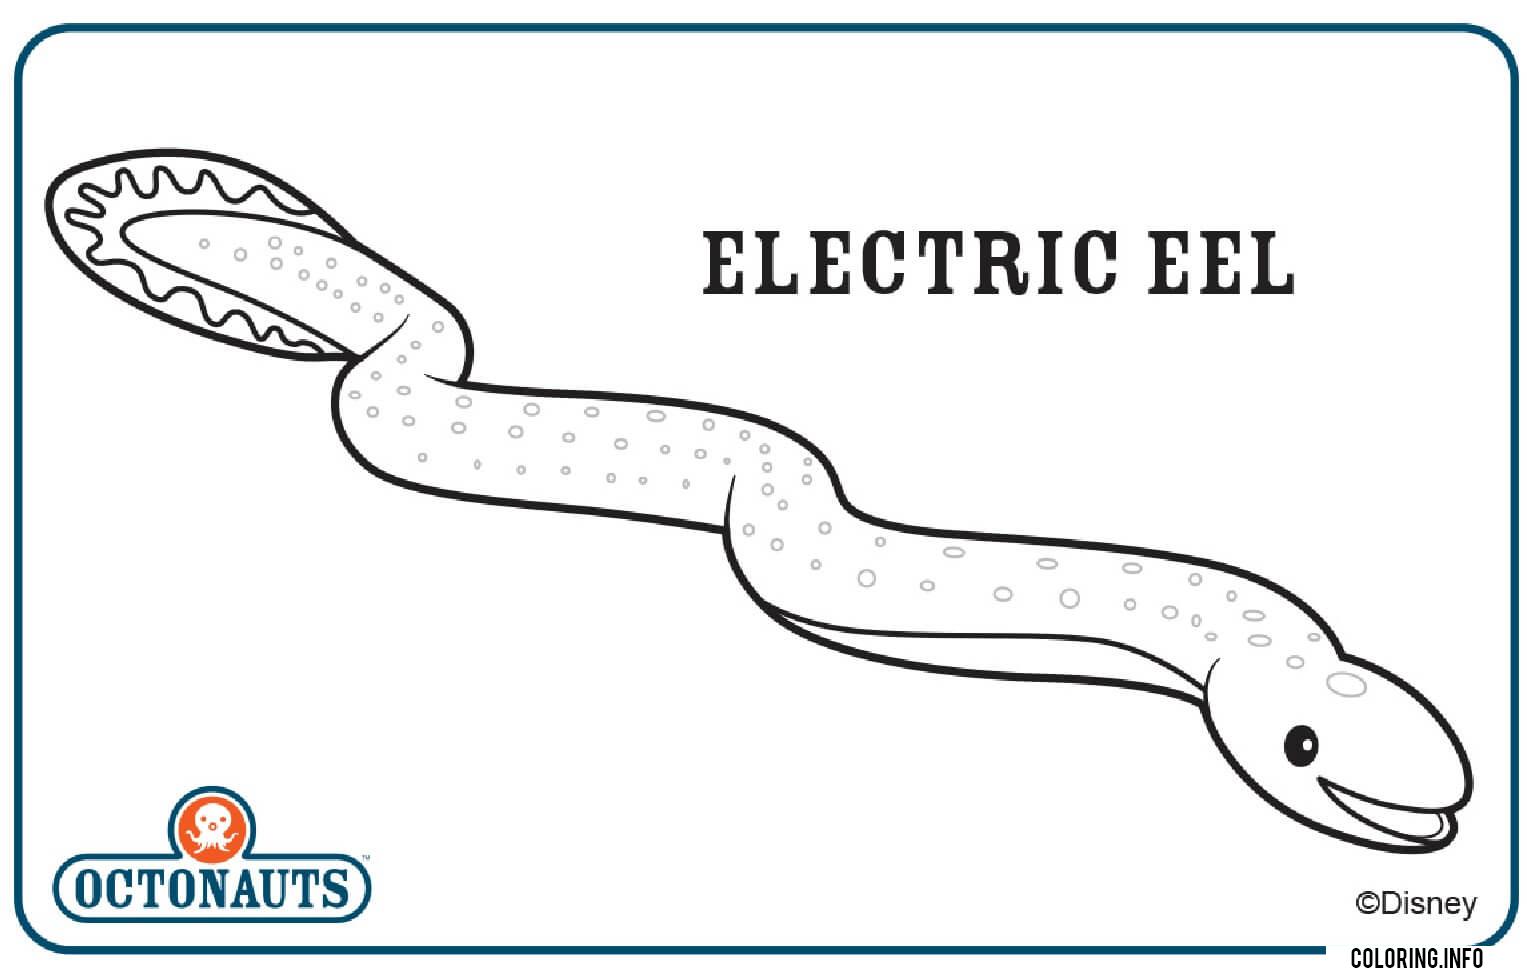 Electric Eel coloring